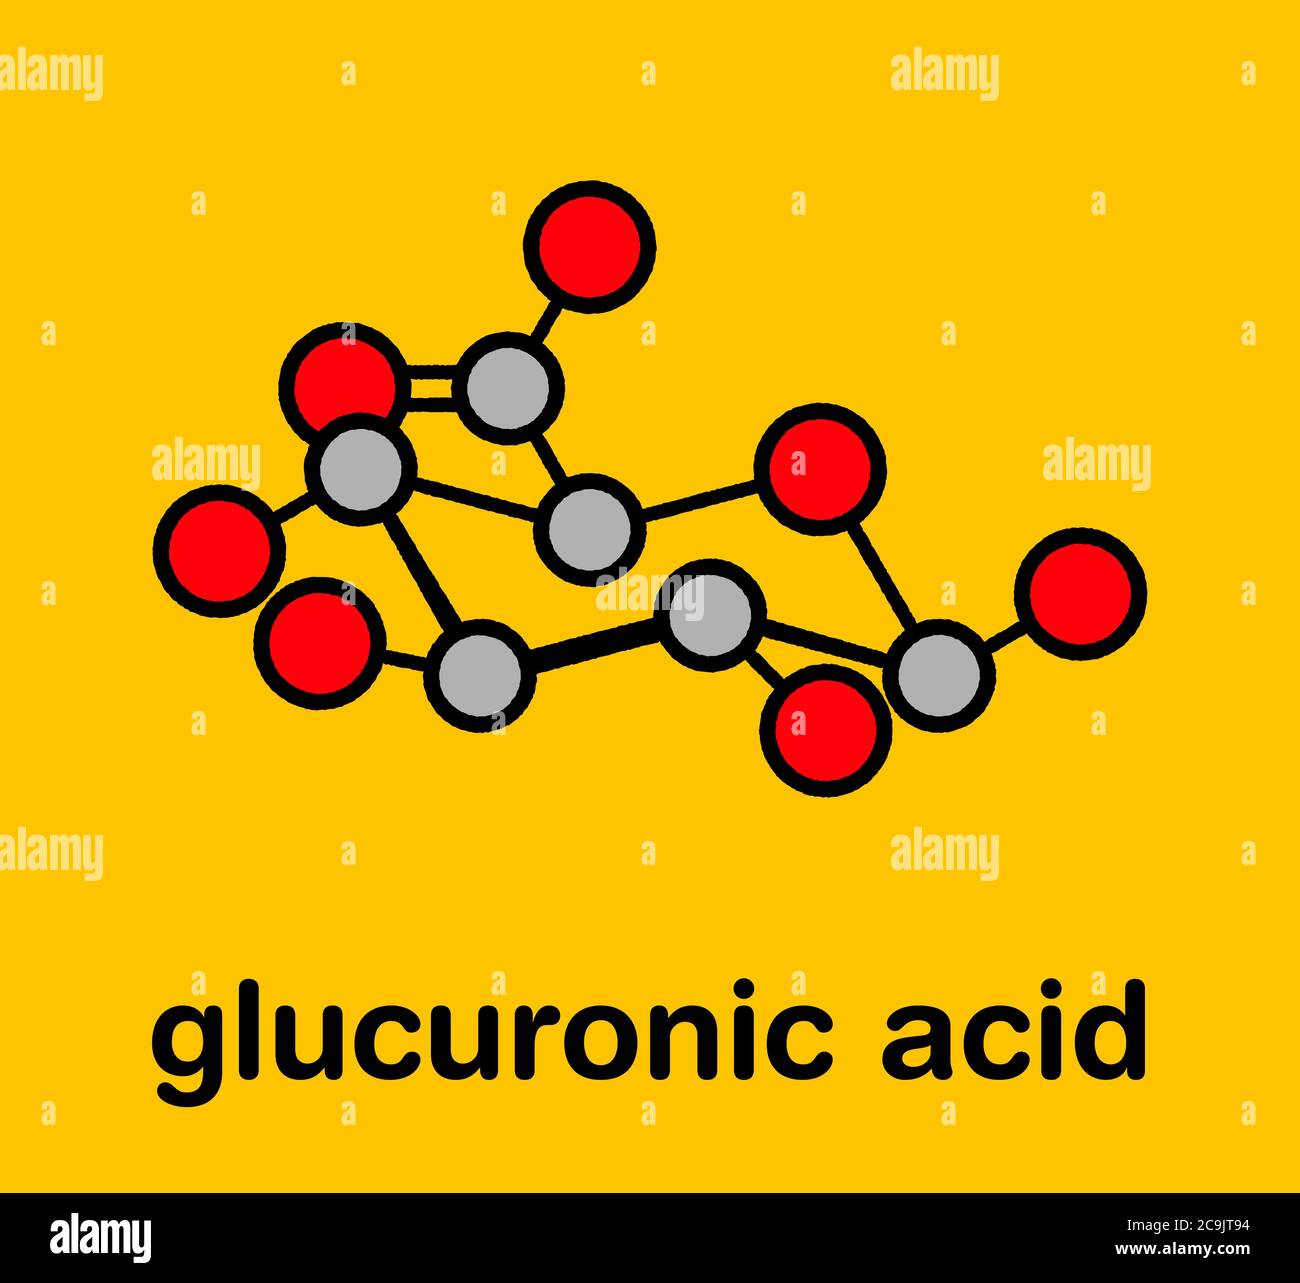 Glucuronic acid molecule. Glucuronidation of xenobiotics plays role in drug metabolism, giving glucuronides. Stylized skeletal formula (chemical struc Stock Photo